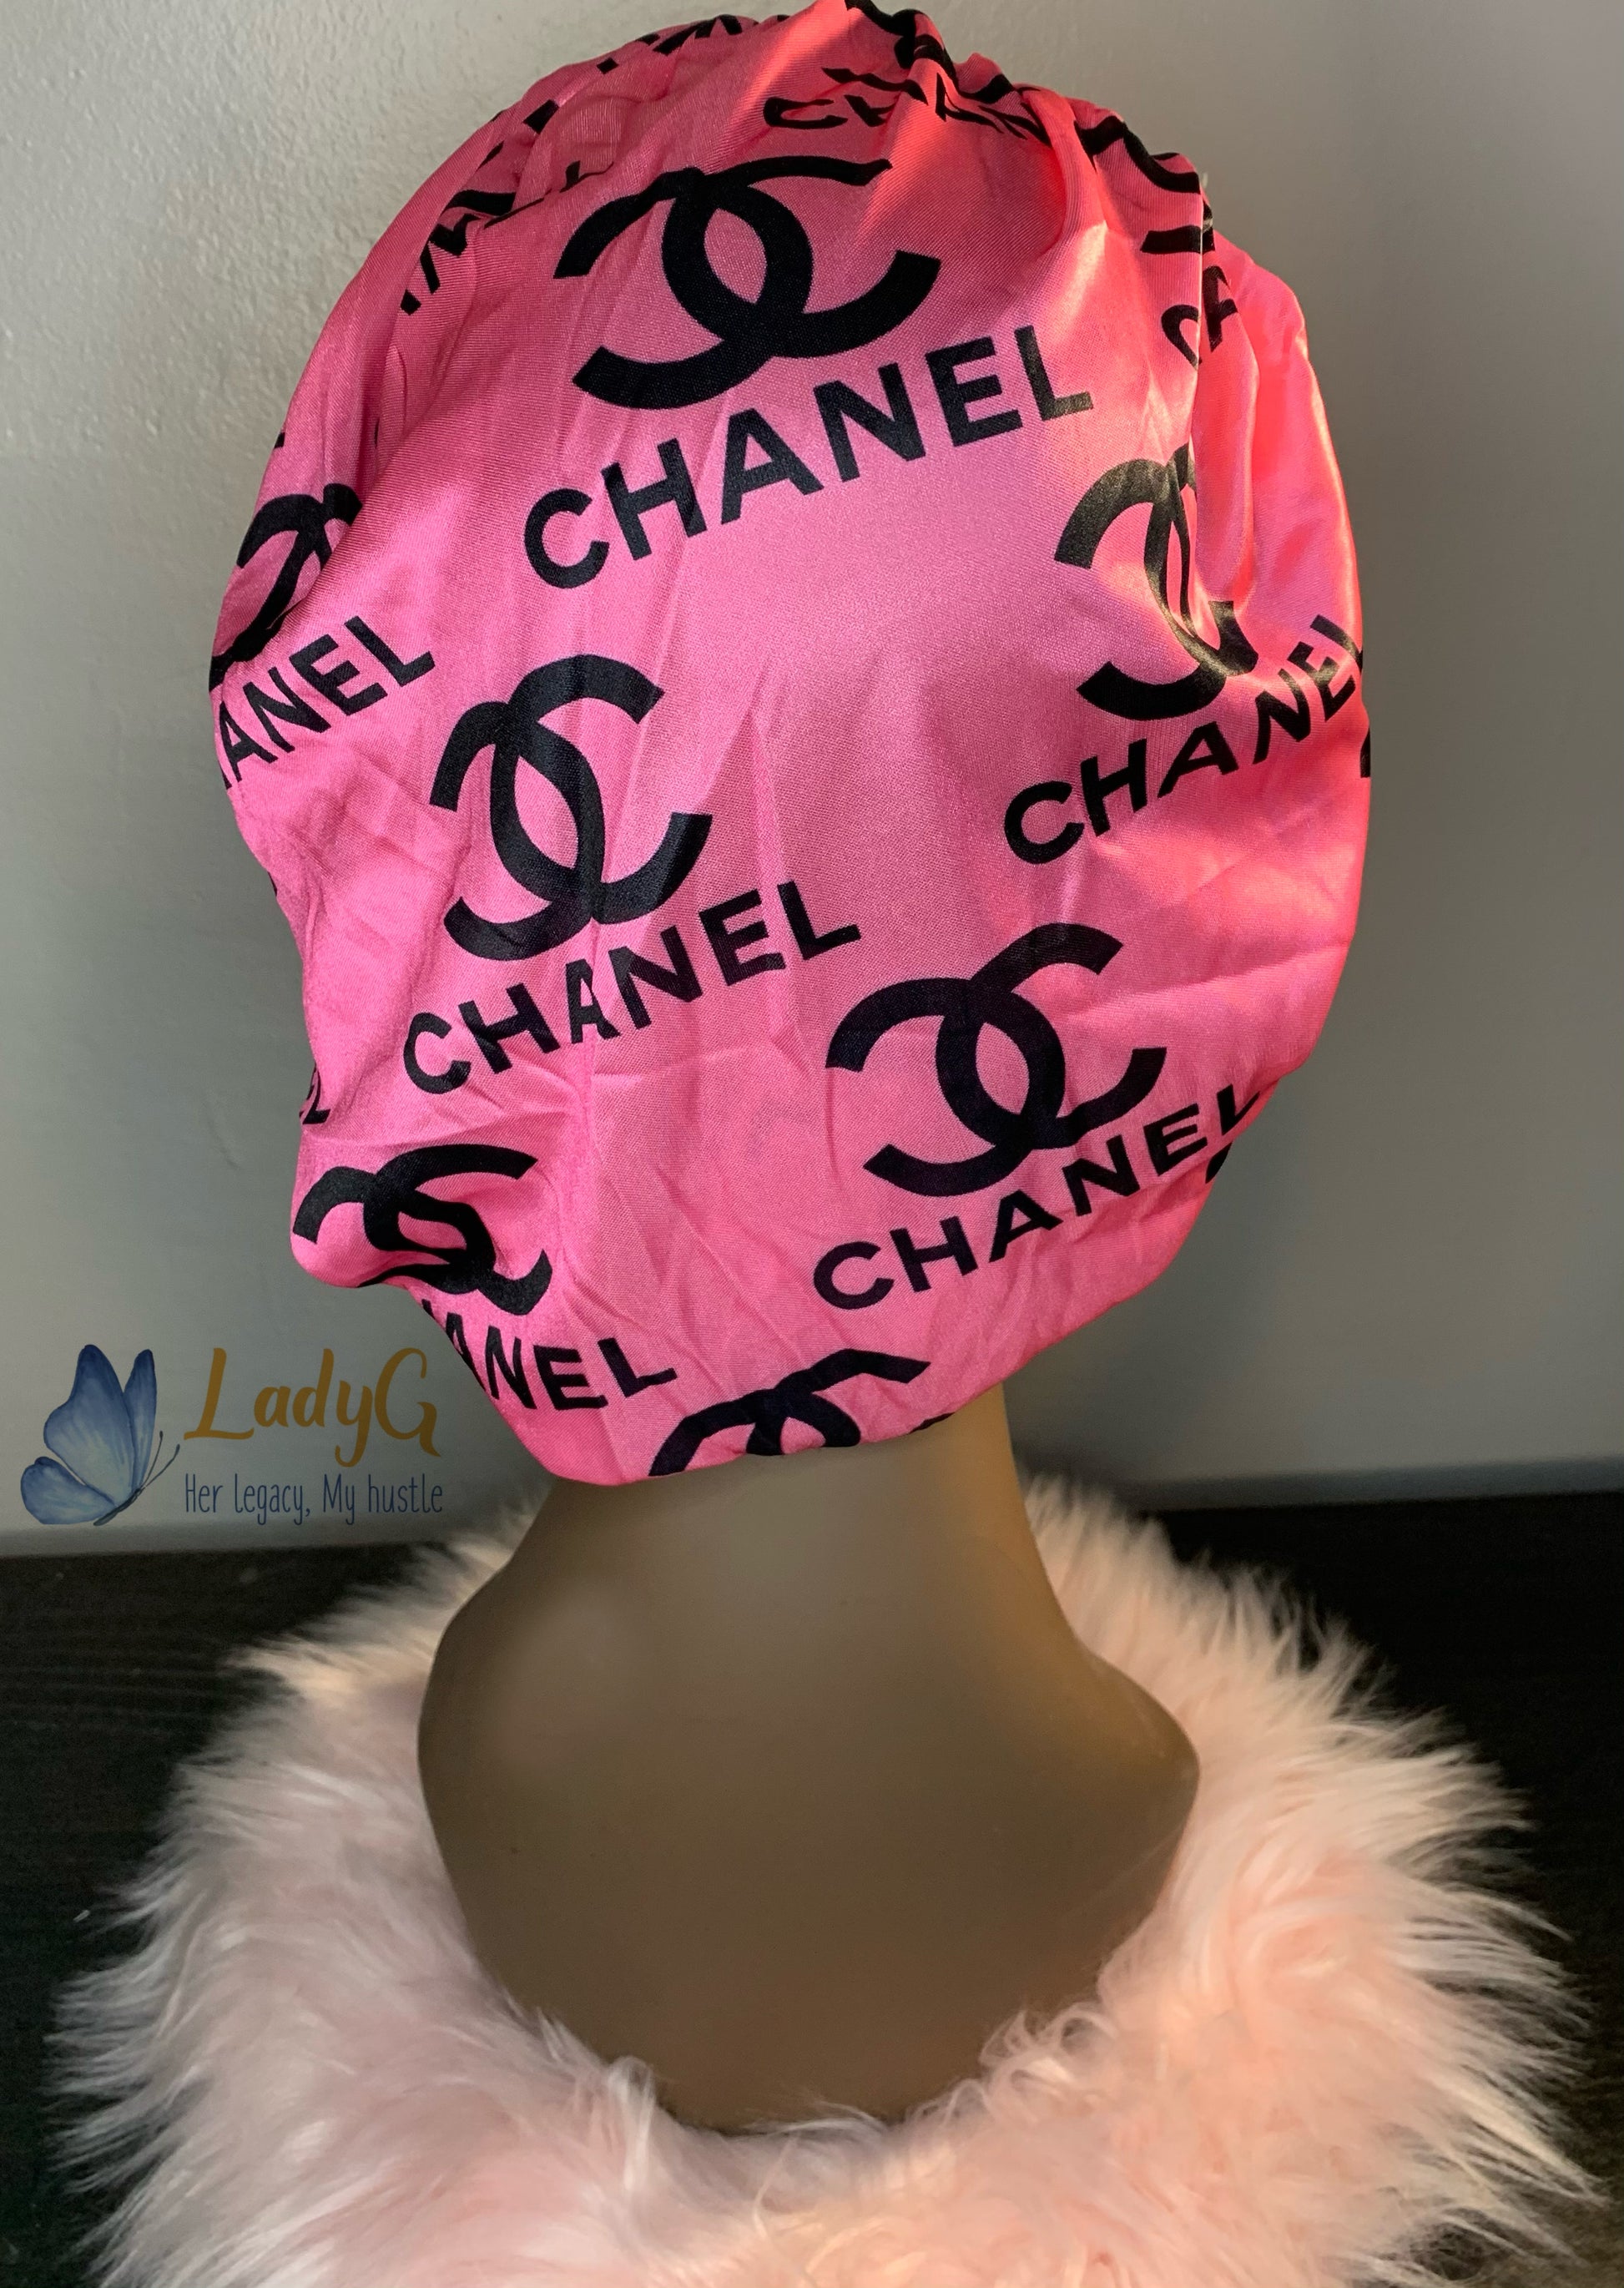 Chanel Bonnet – LadyG LLC